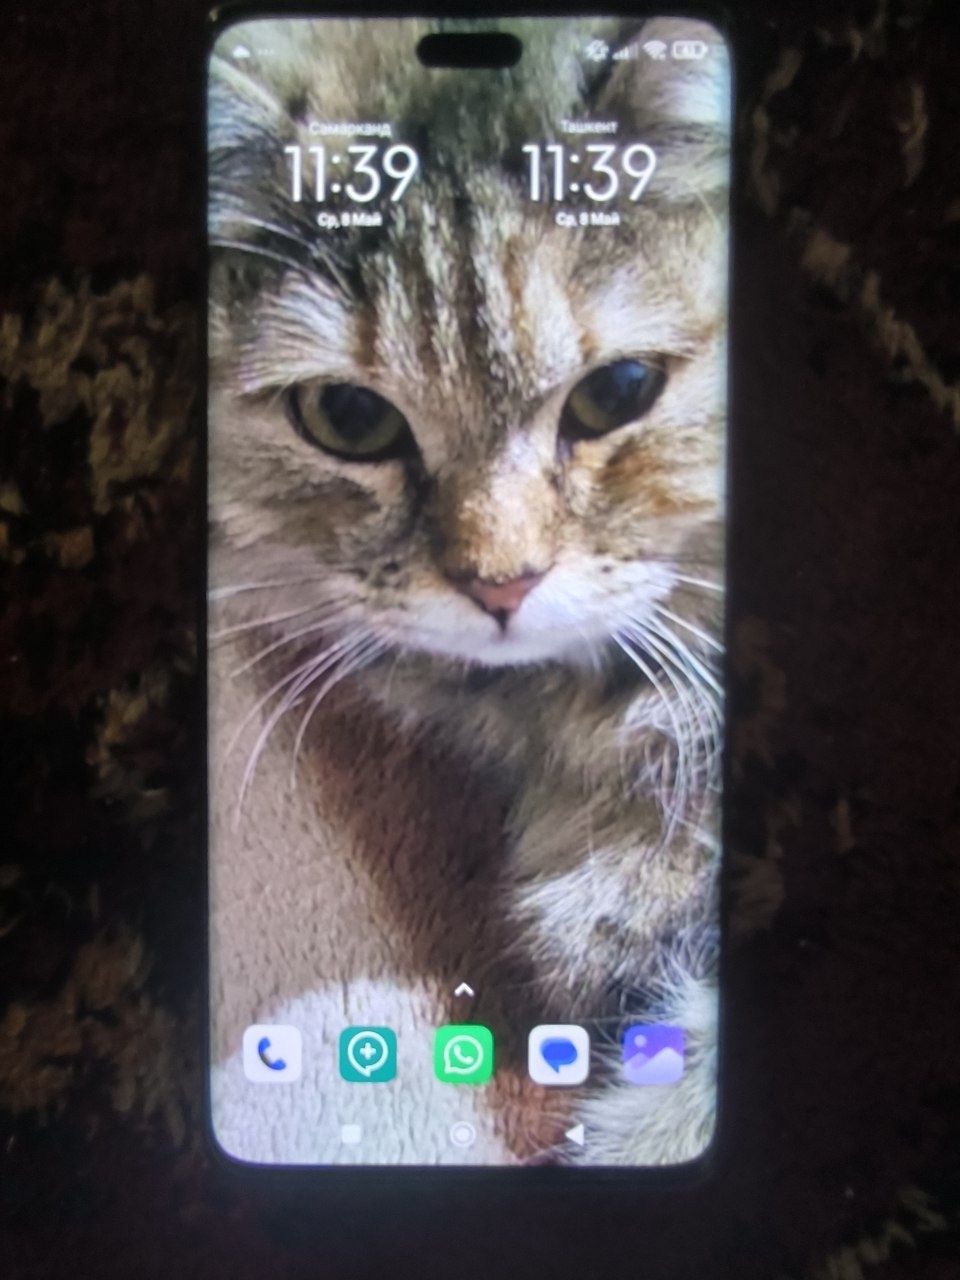 Xiaomi 13 lete telefon